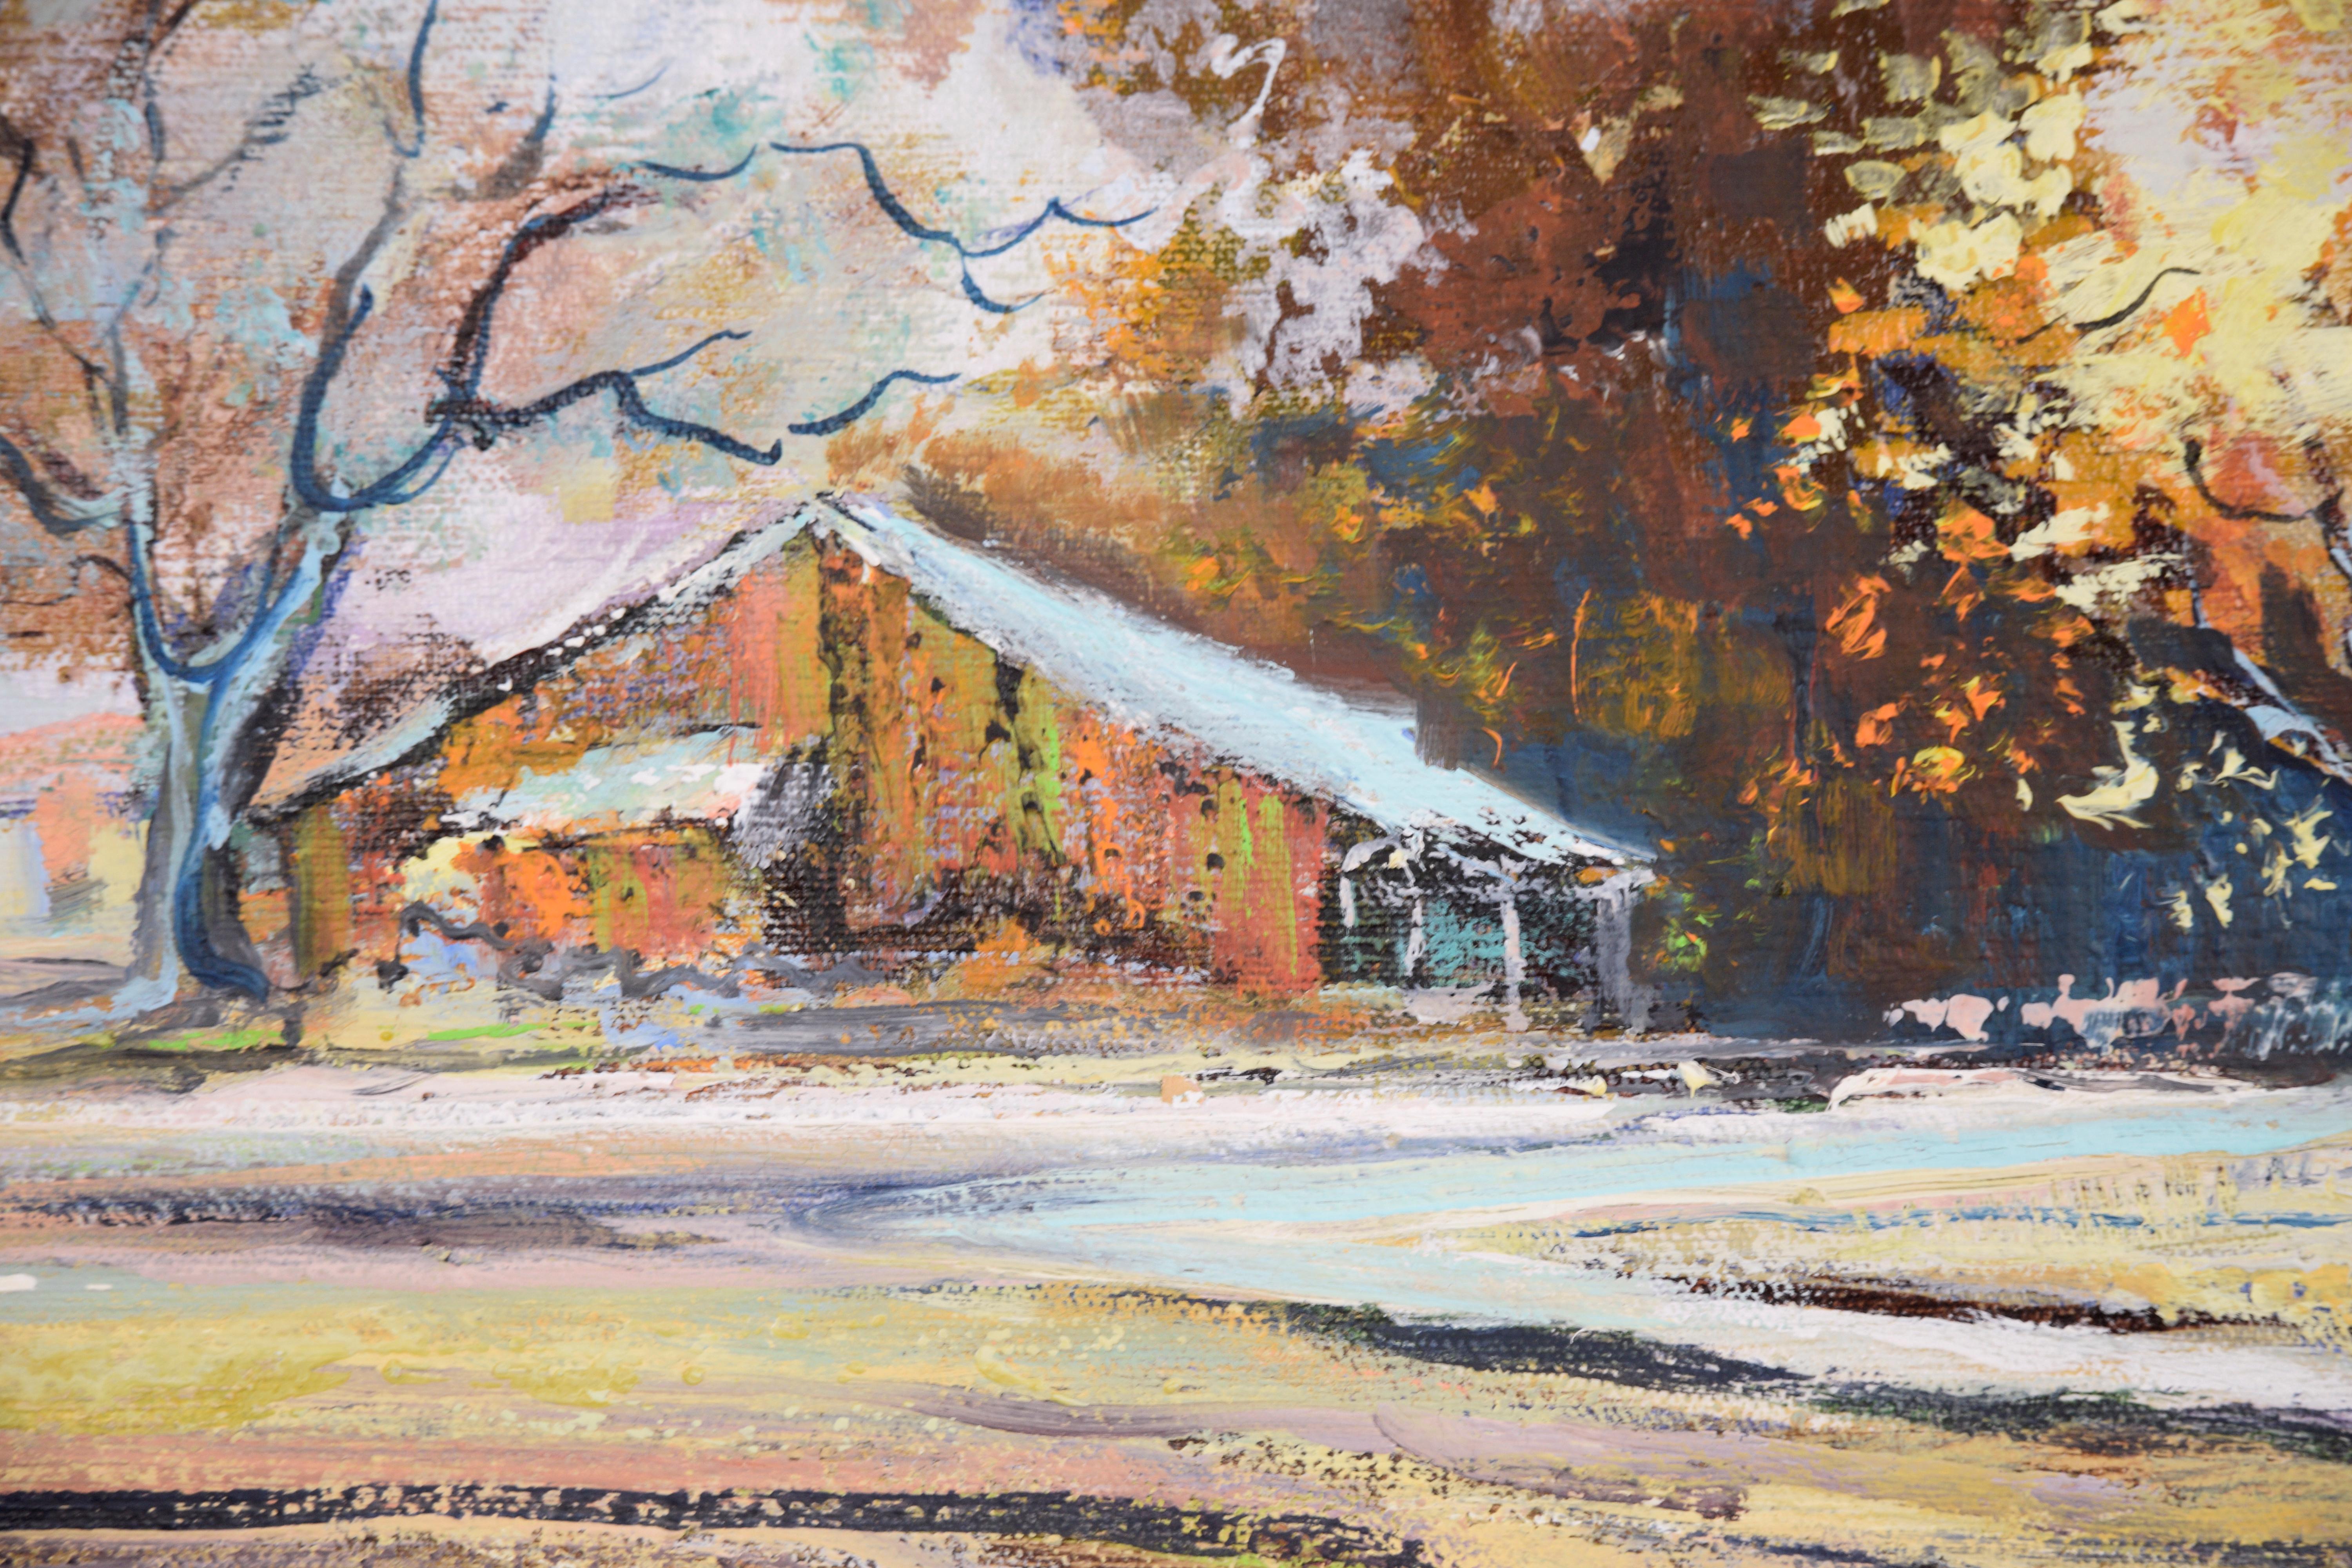 Rural Farm Landscape - American Impressionist Painting by Tom Olson